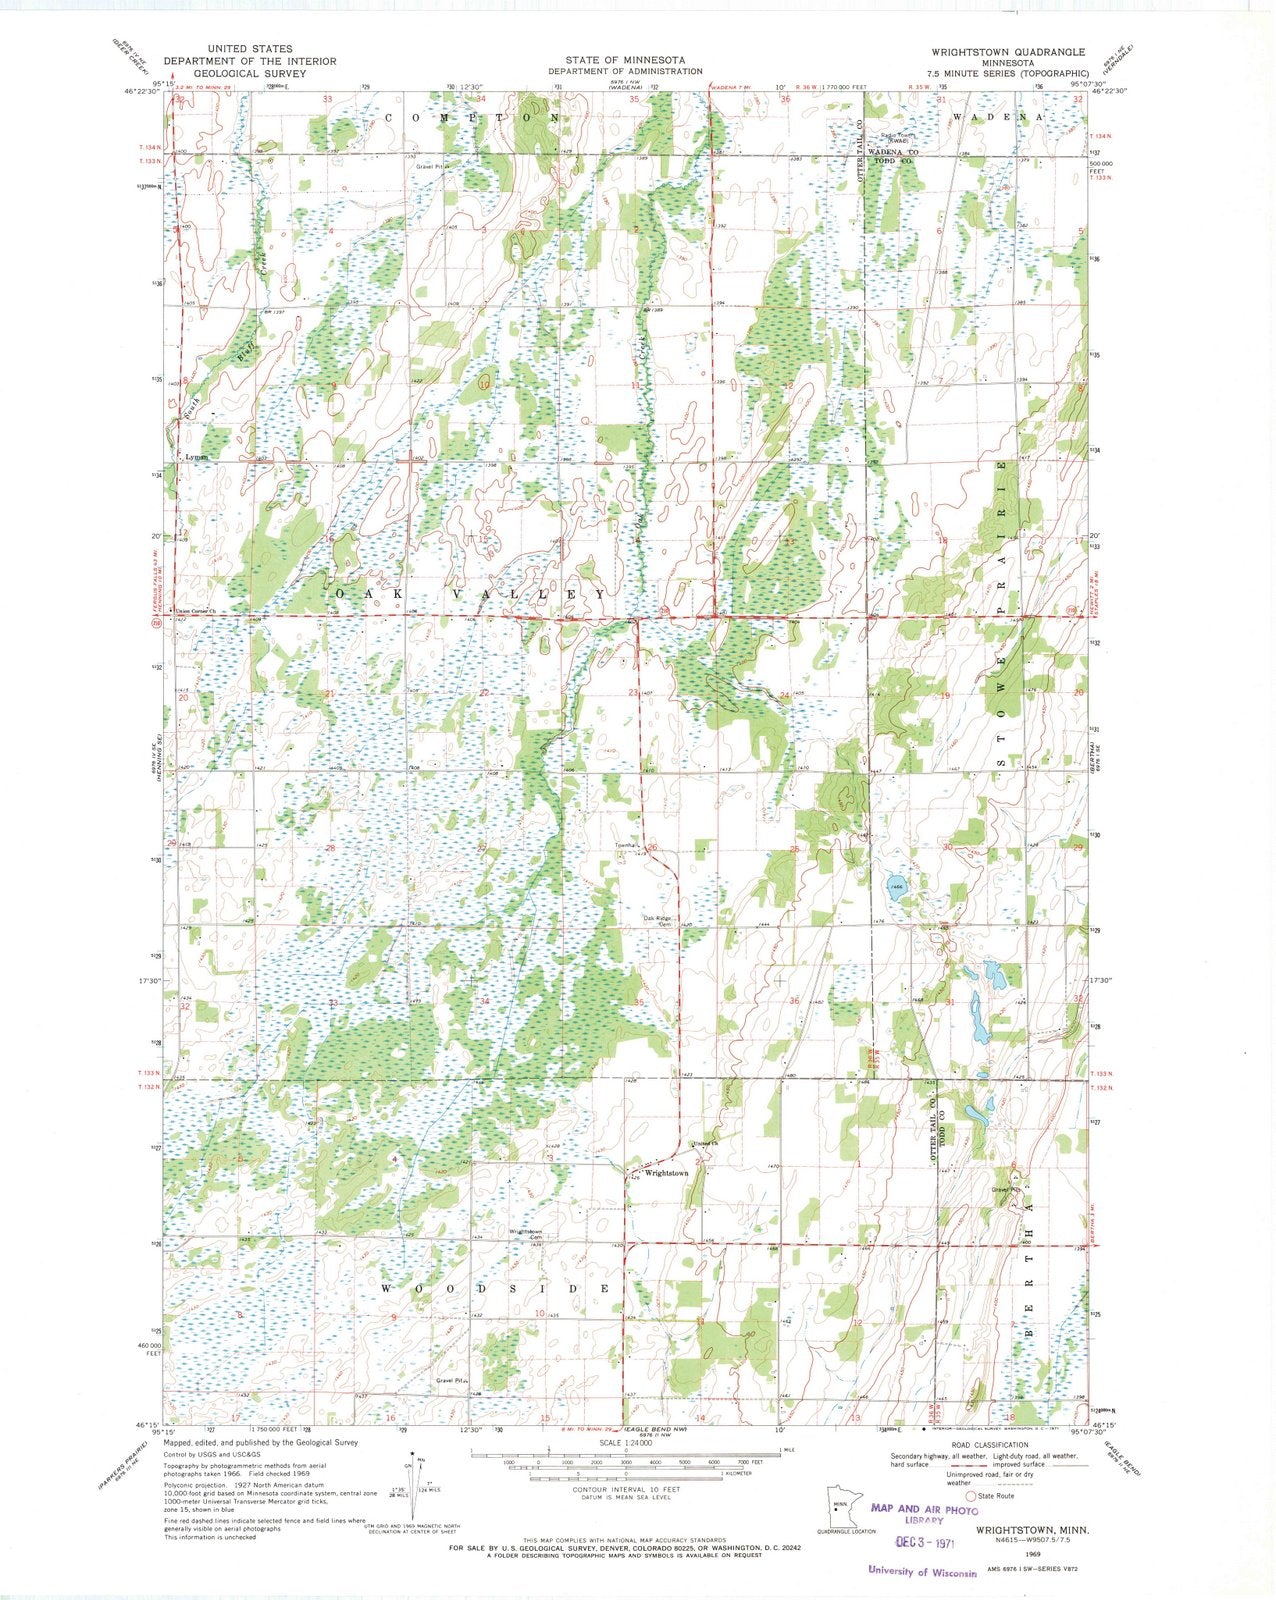 1969 Wrightstown, MN - Minnesota - USGS Topographic Map